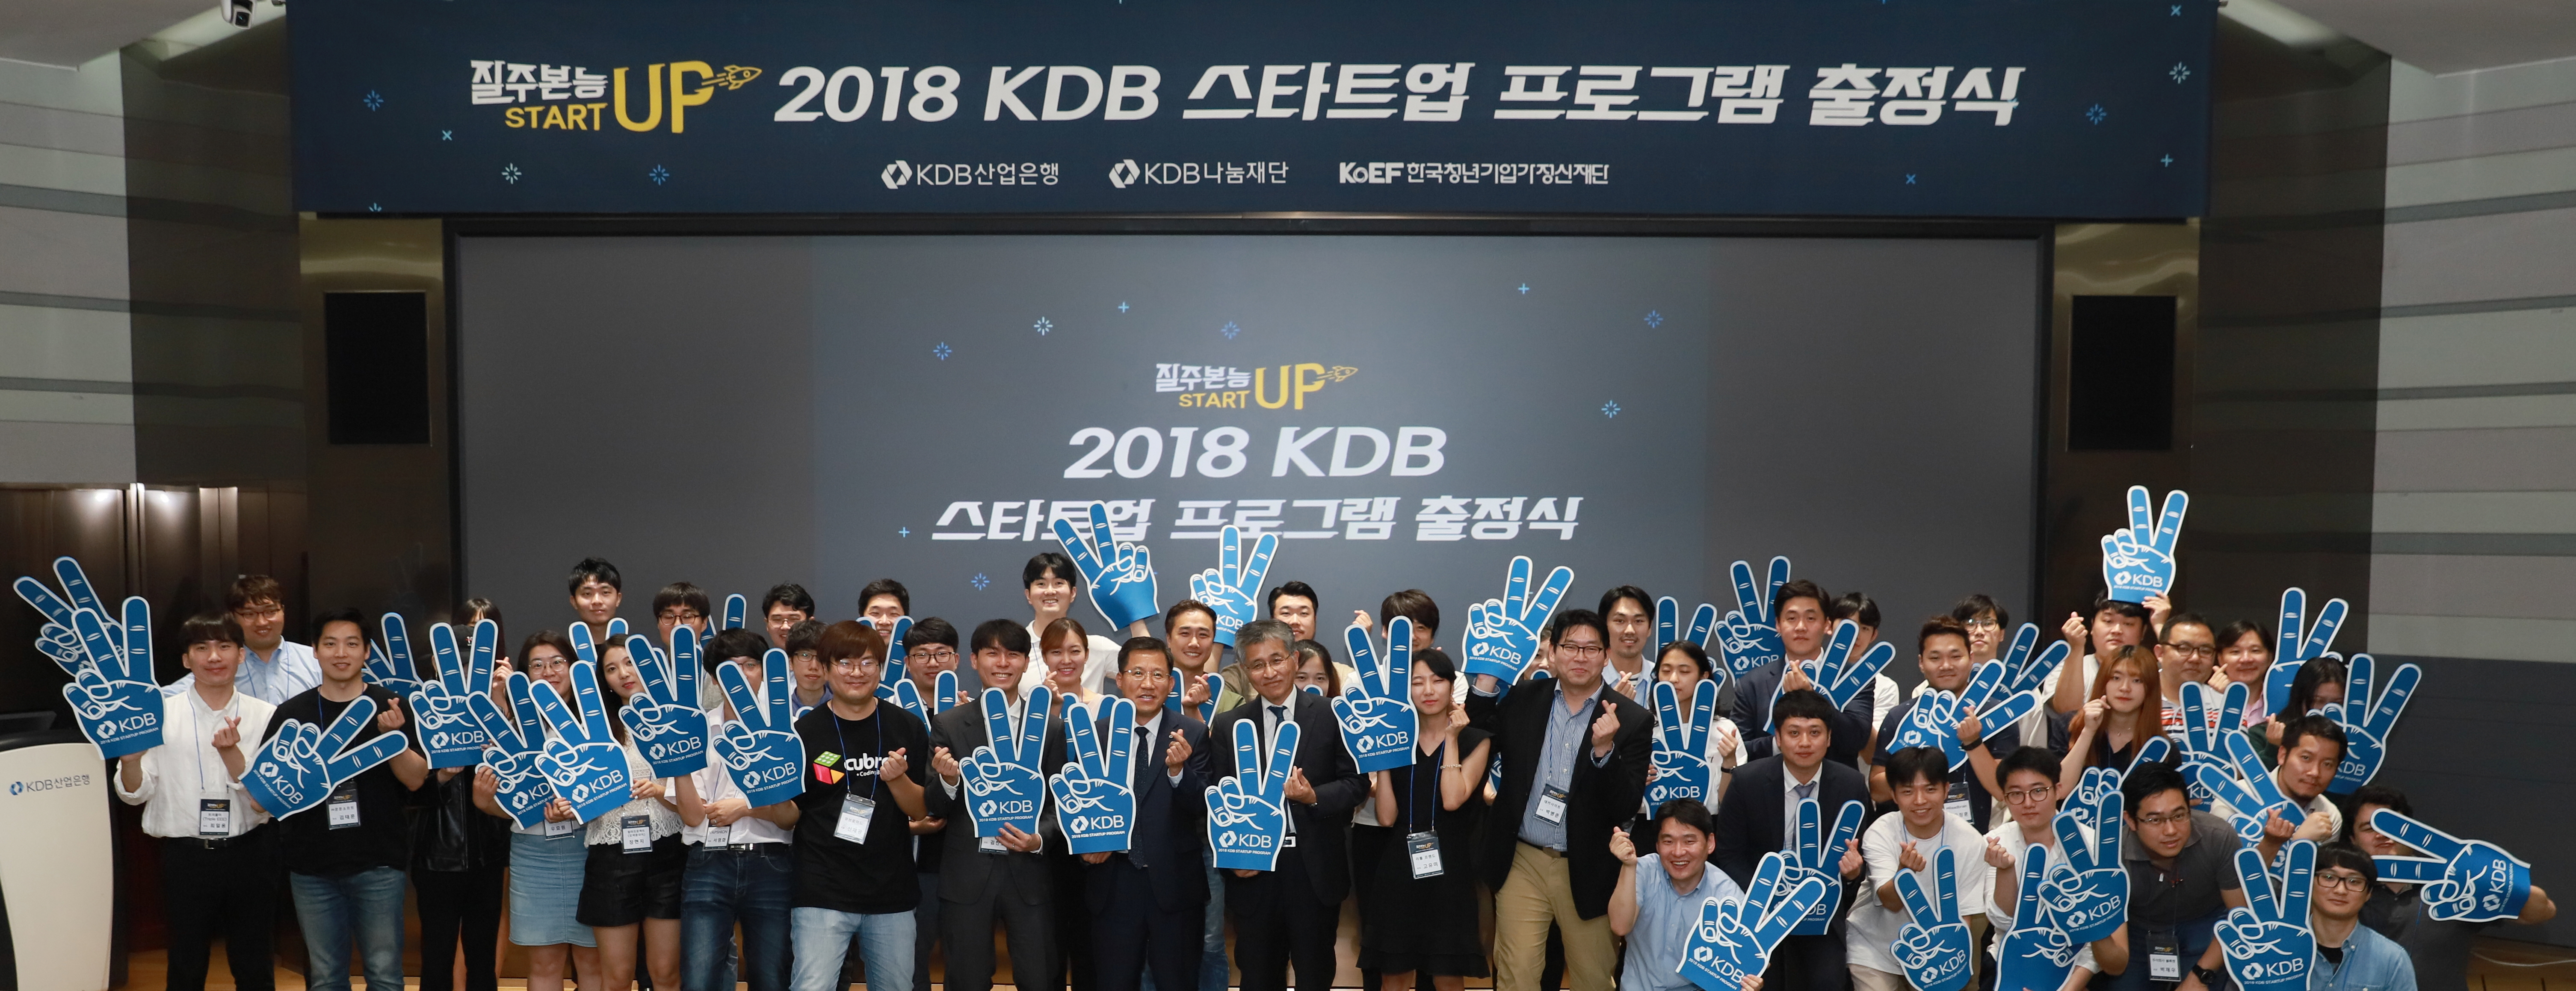 <p>2018 KDB 스타트업 프로그램 출정식</p>
